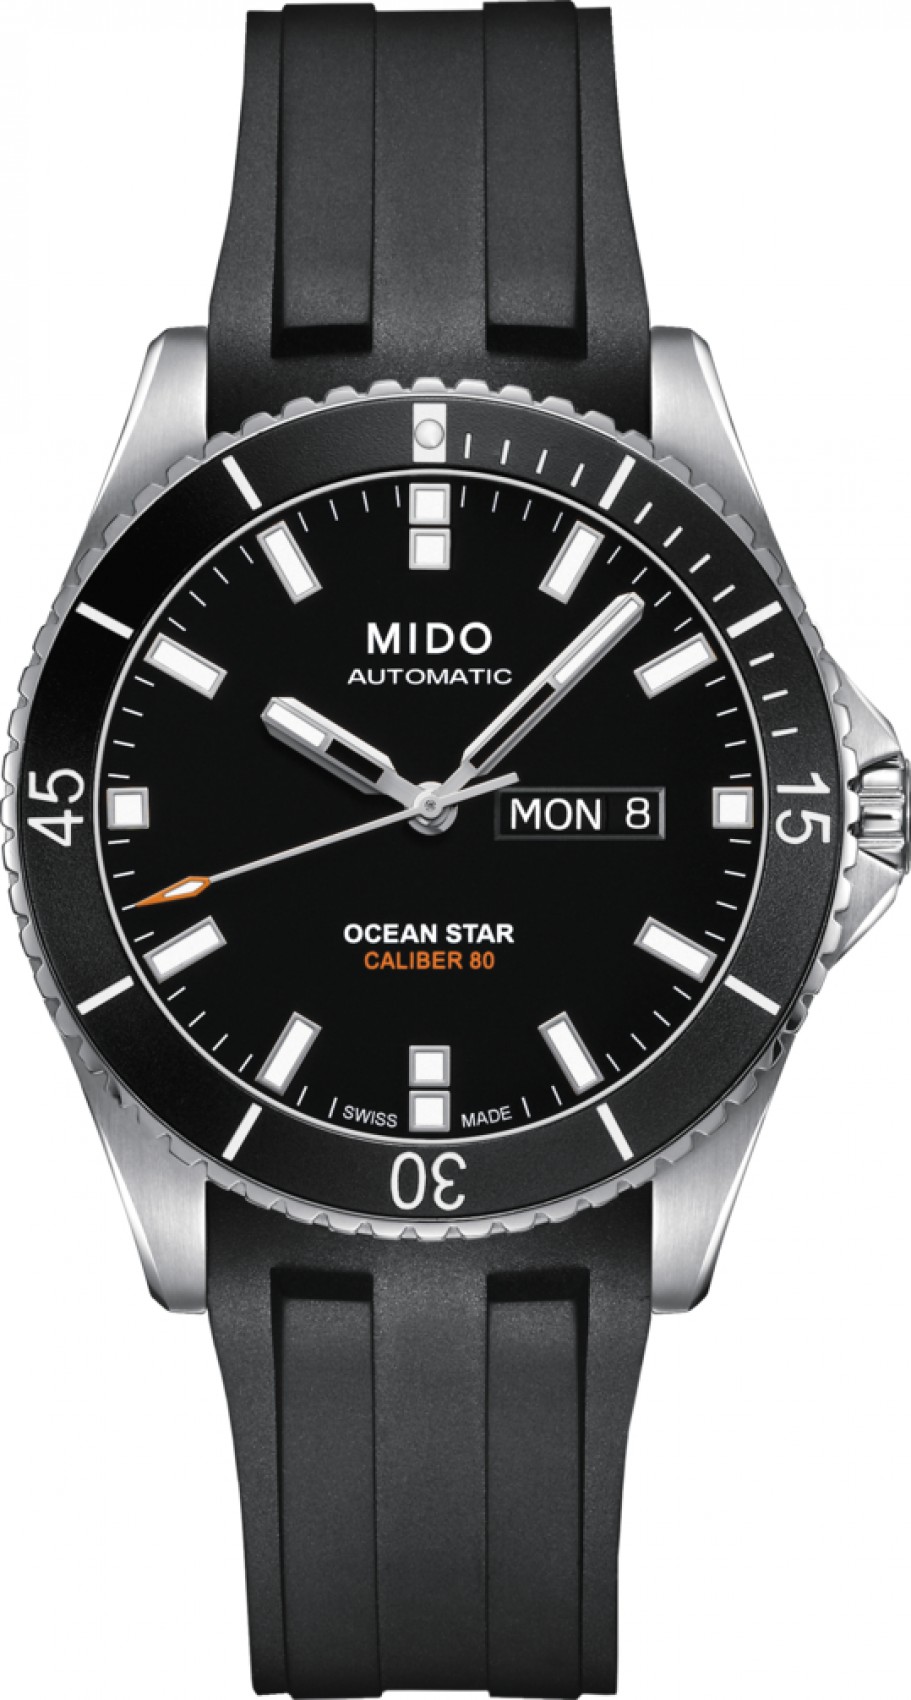 MIDO OCEAN STAR 200